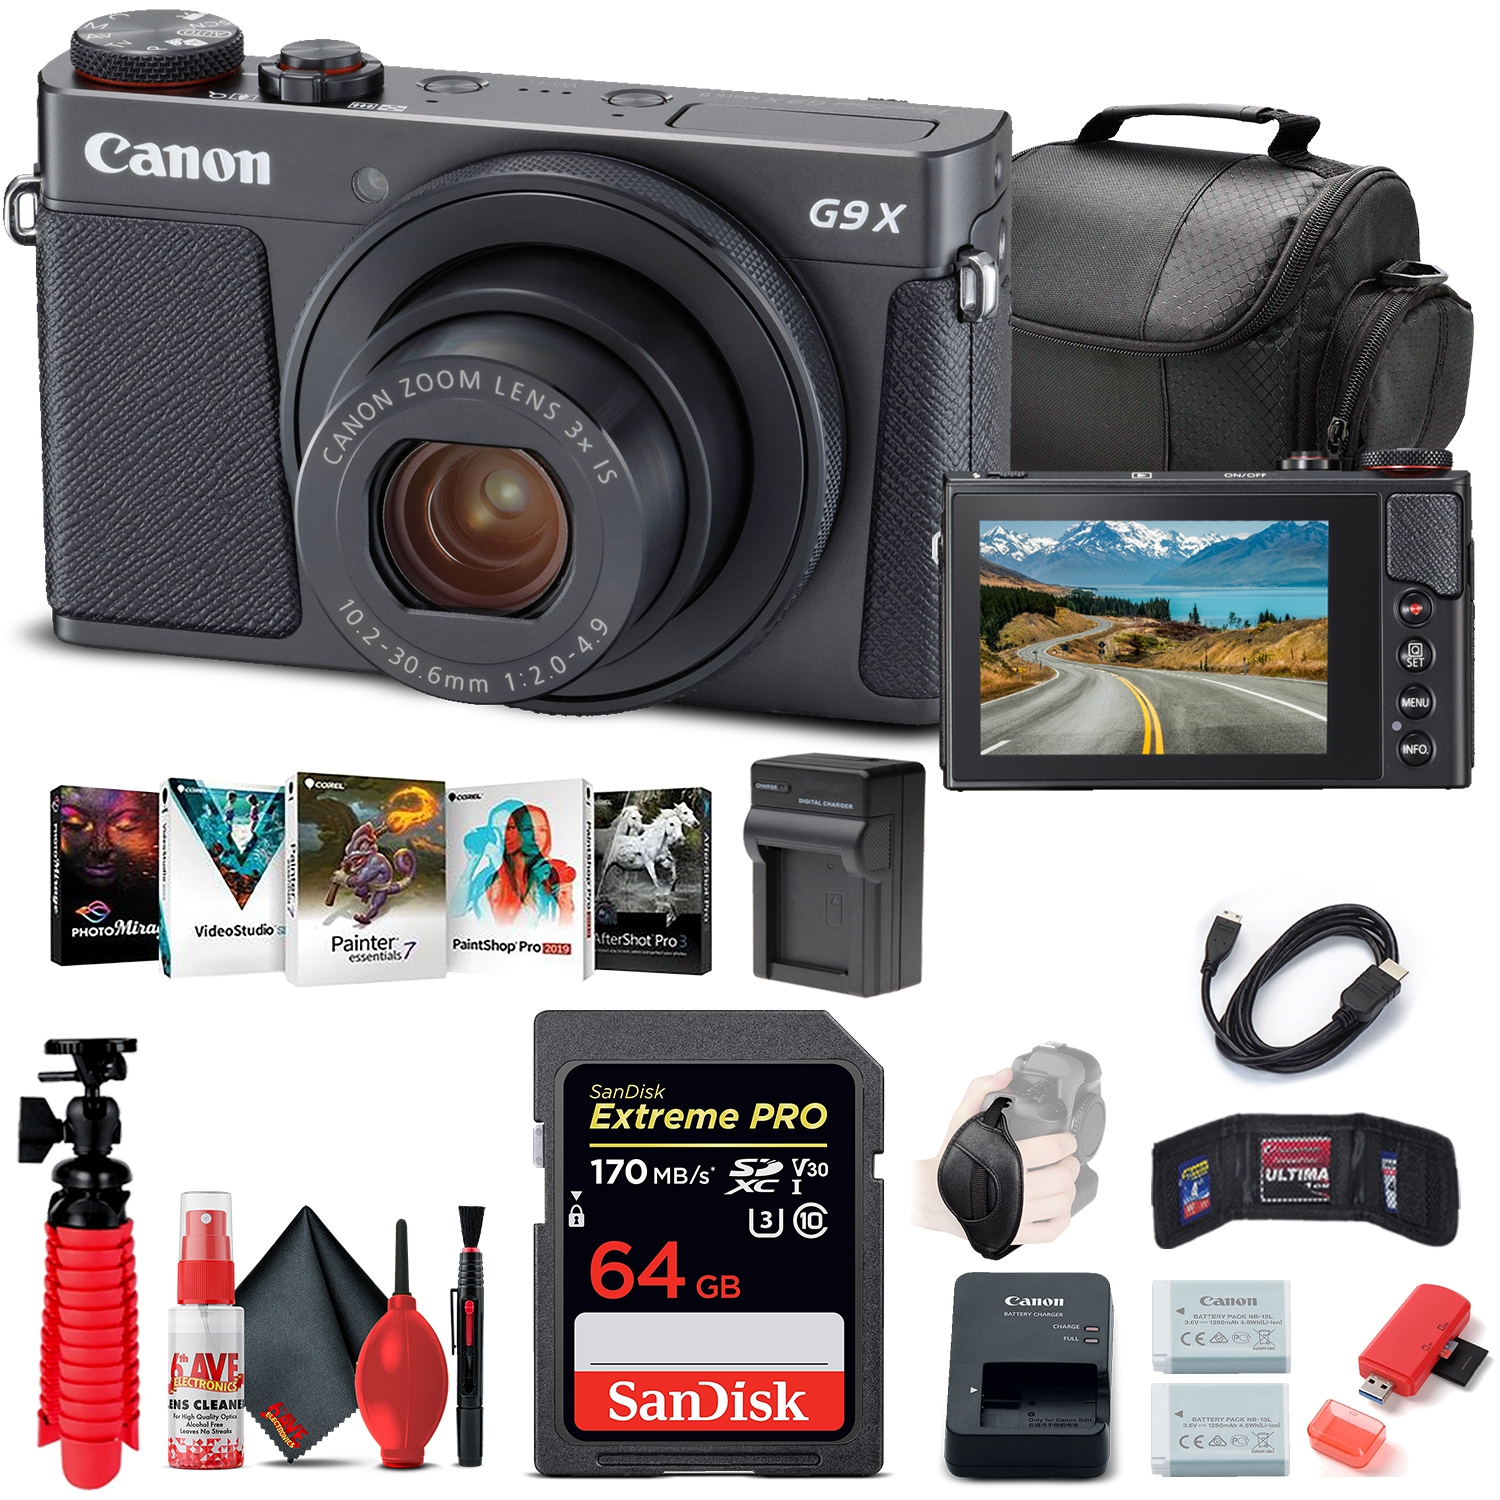 Canon PowerShot G9 X Mark II Digital Camera (1717C001) + 64GB Card + More